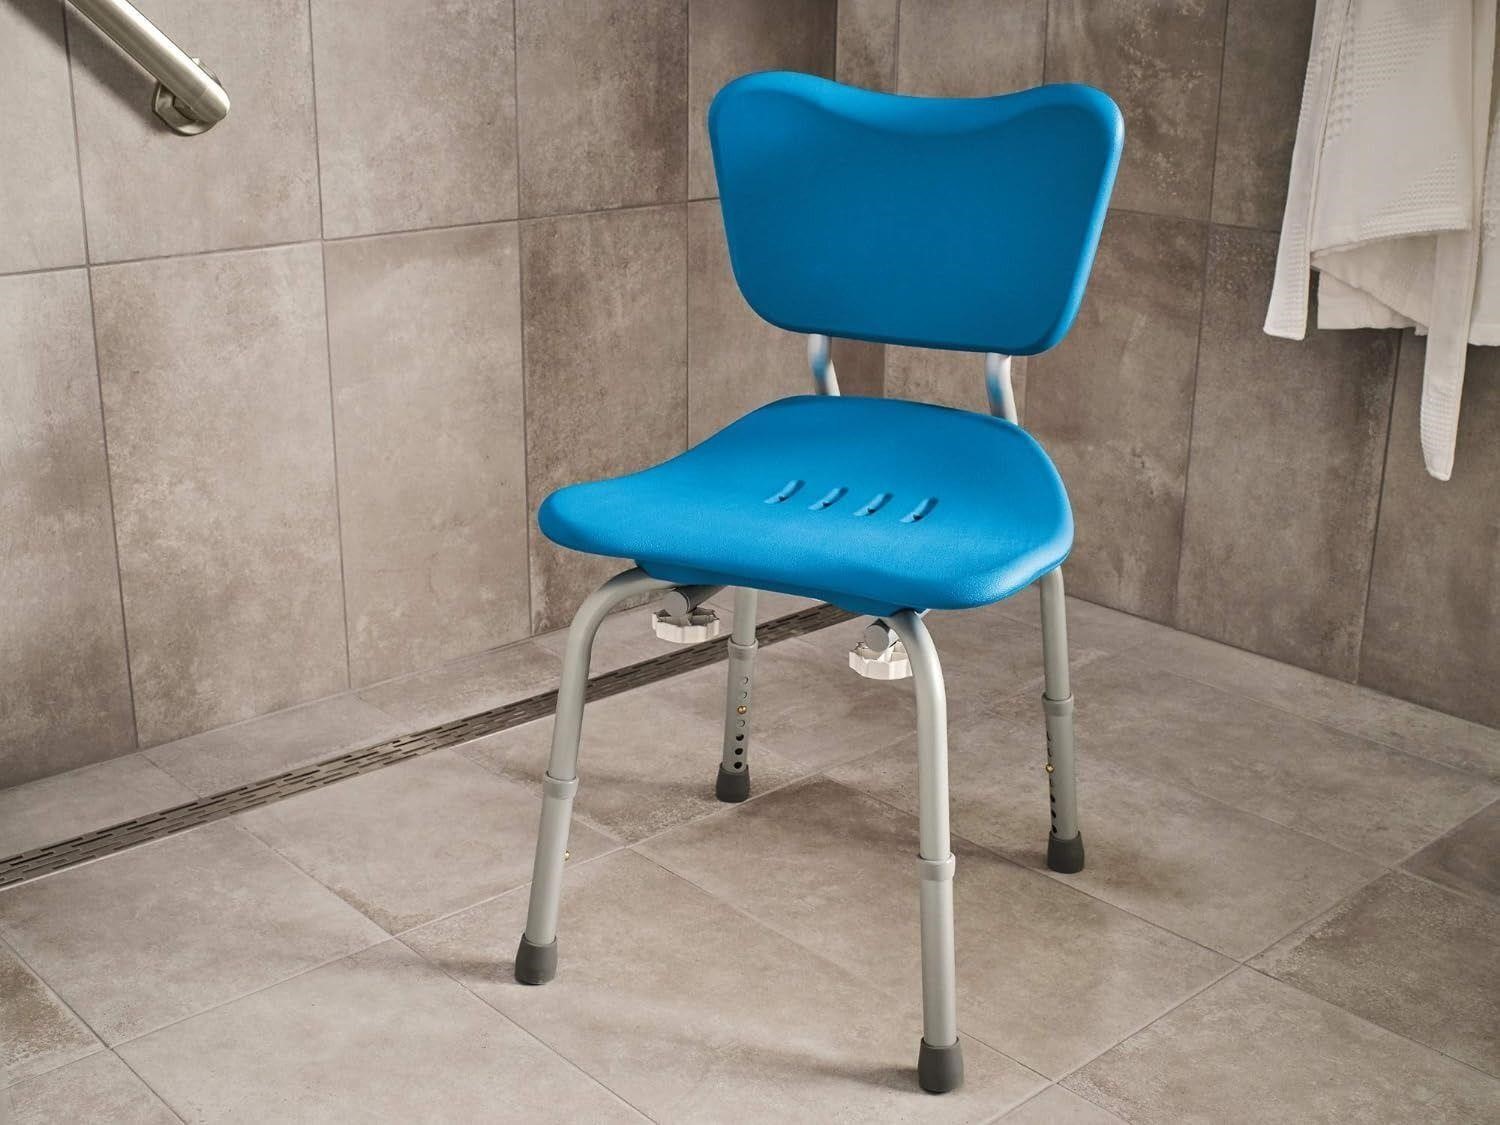 Moen Bath Safety Bathroom Shower Chair